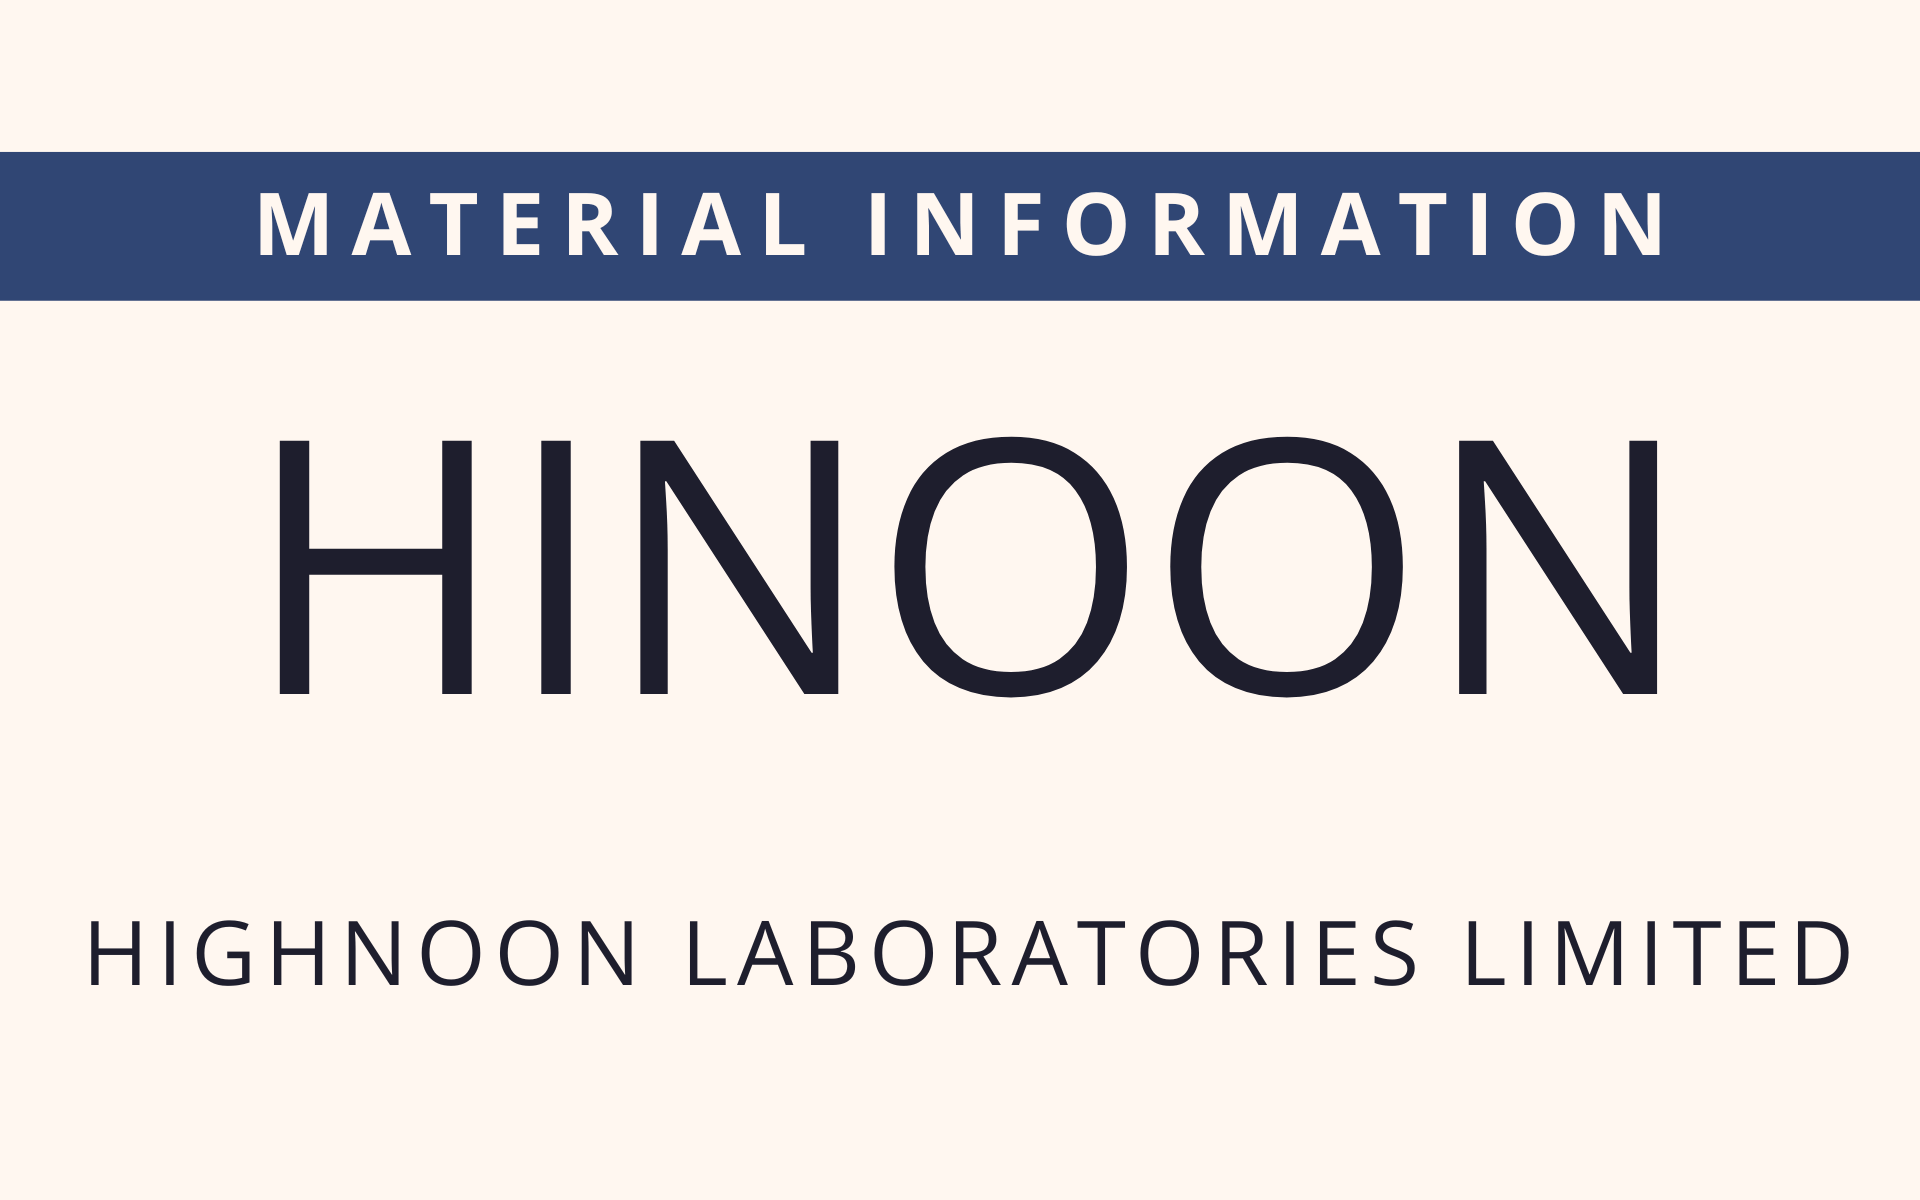 HINOON